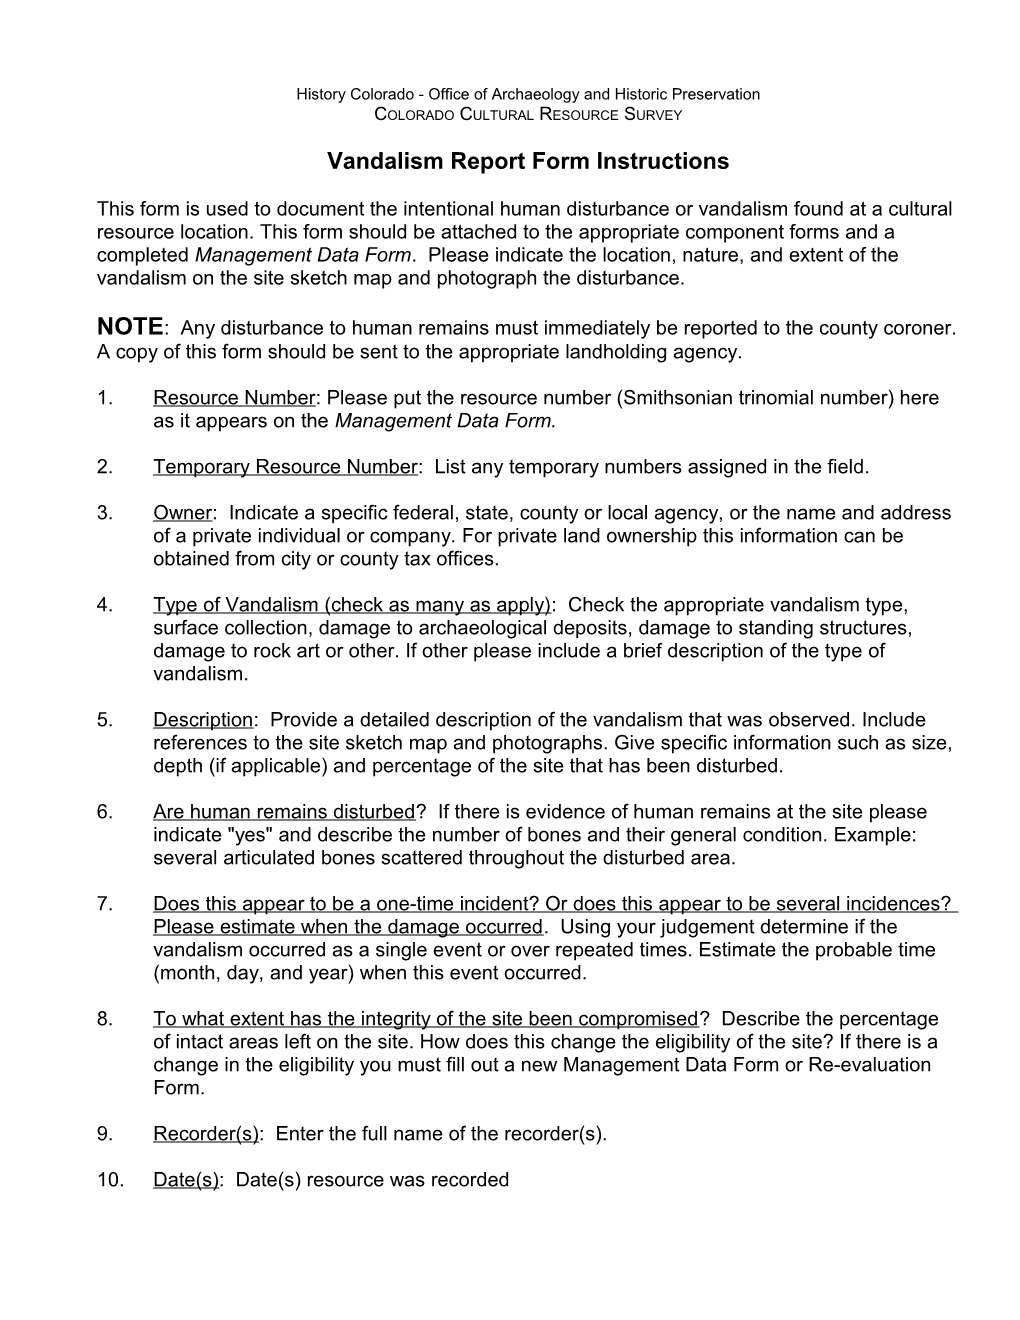 Vandalism Report Form Instructions - Word Version